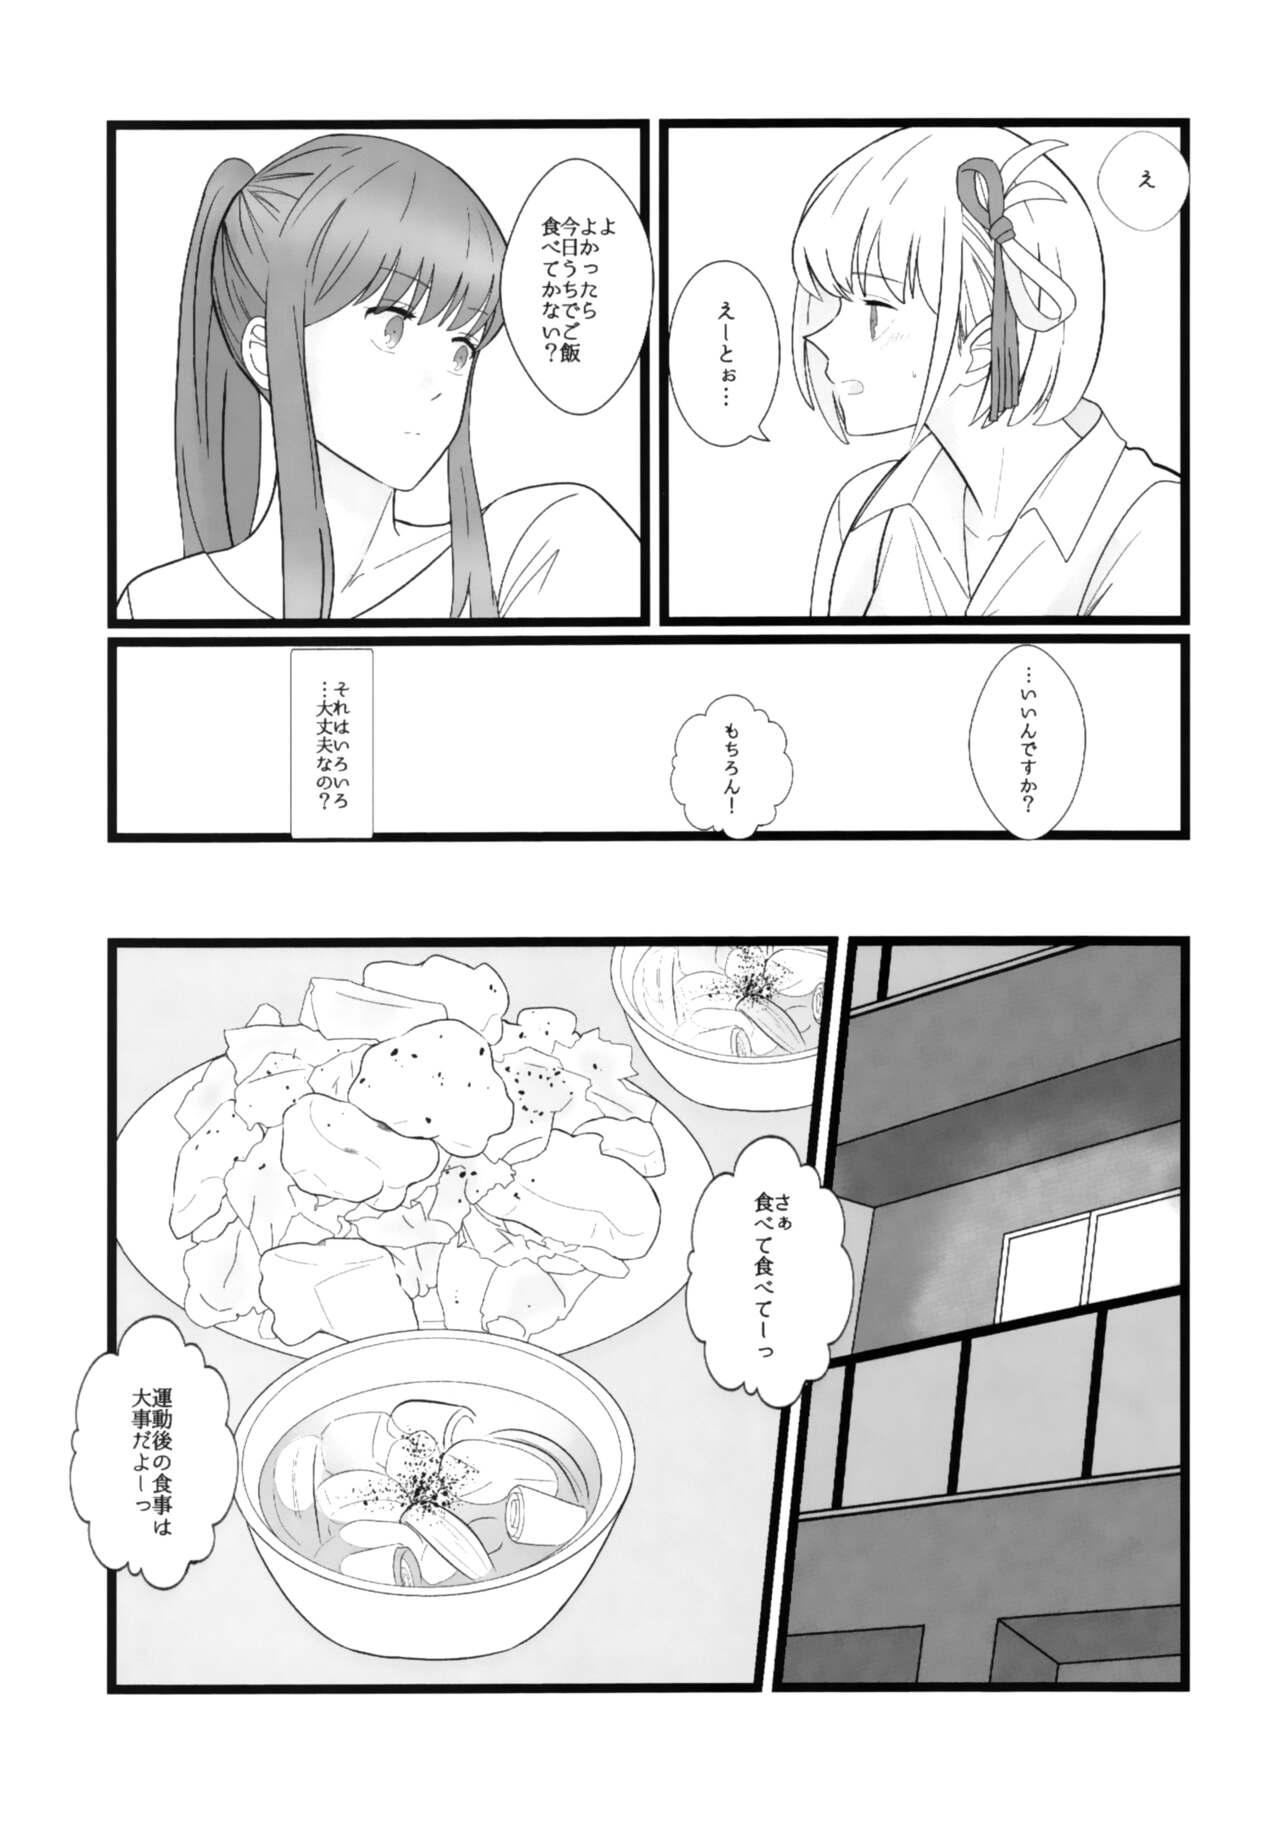 Workout Takina to Chisato. - Lycoris recoil Couple - Page 9